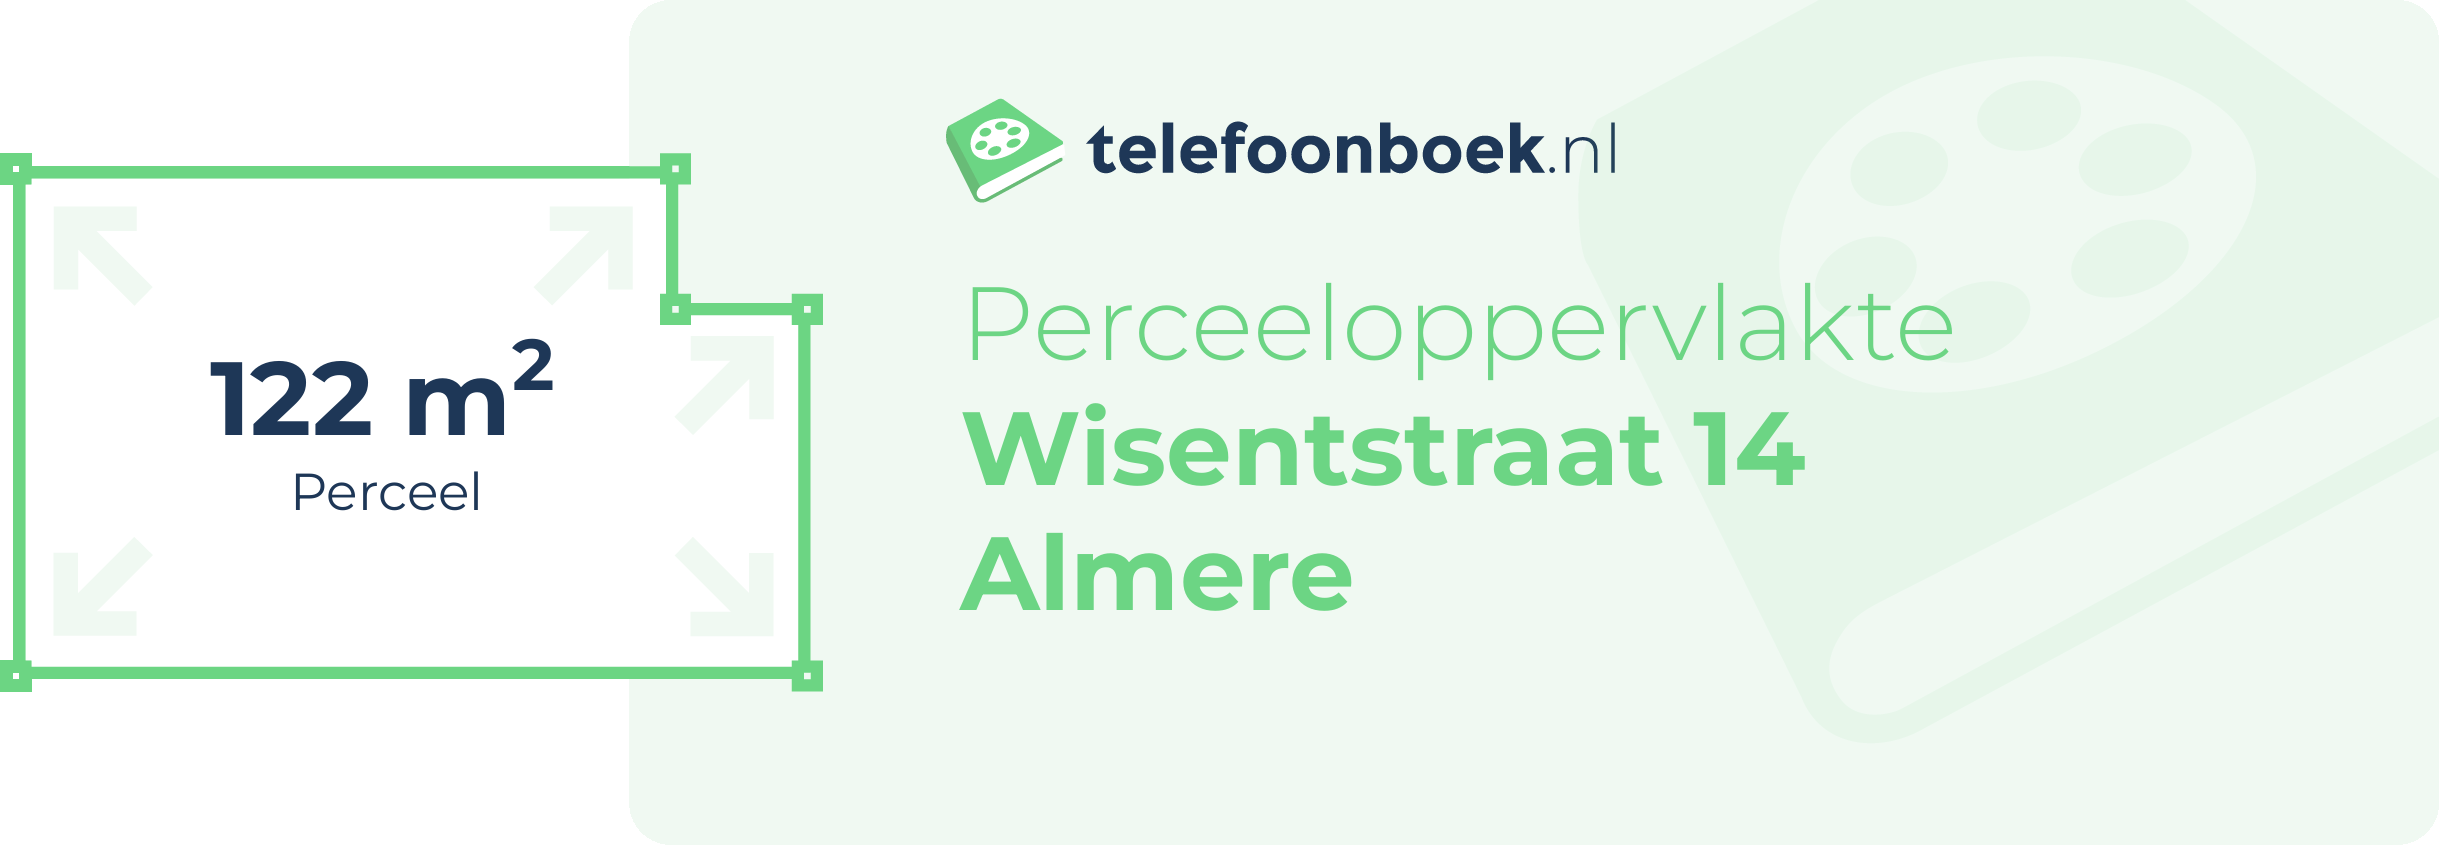 Perceeloppervlakte Wisentstraat 14 Almere